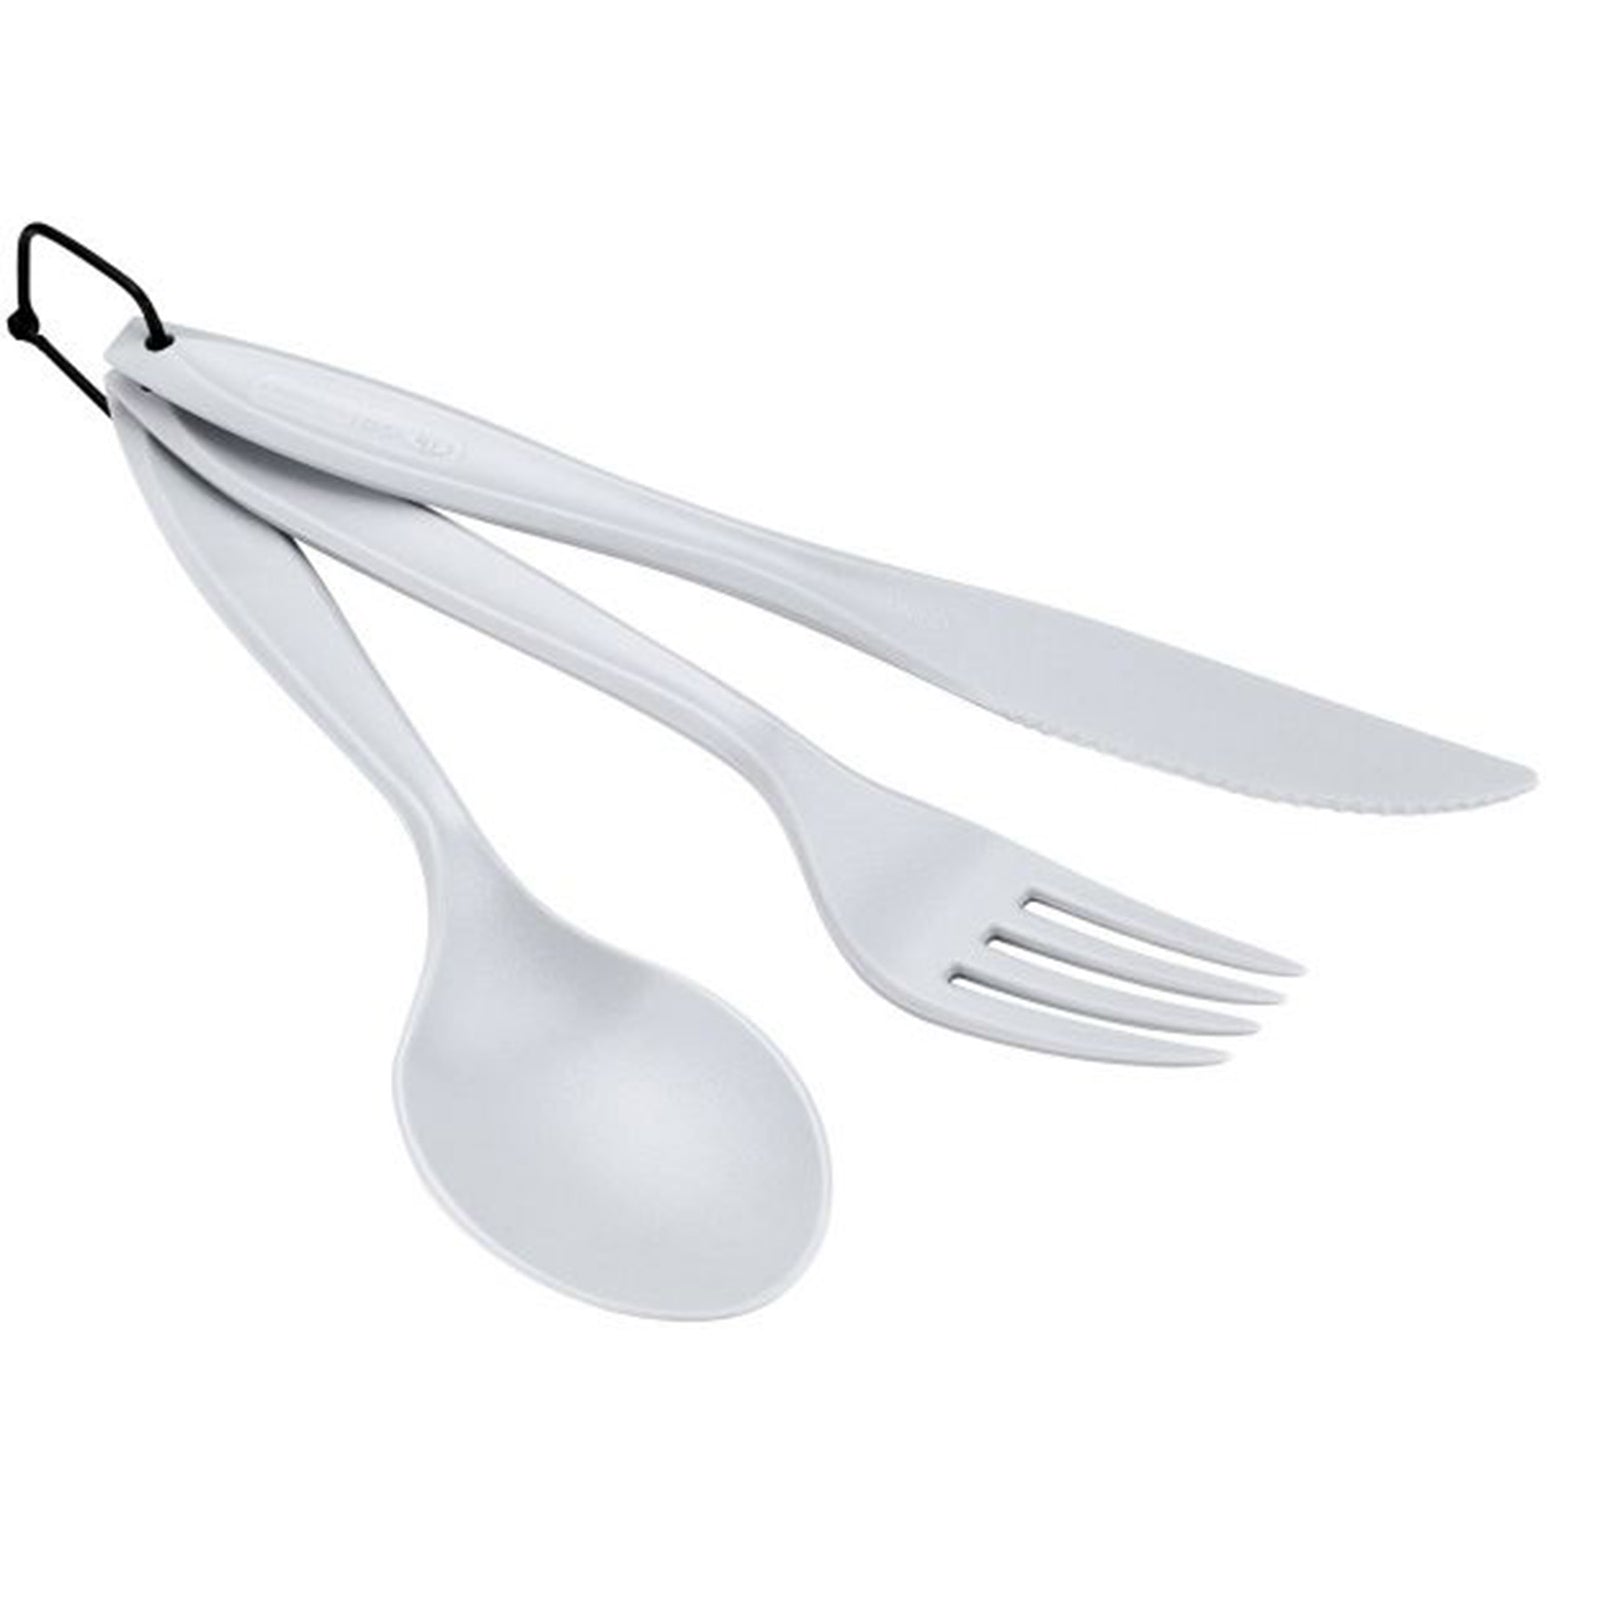 a lexan knife, fork, and spoon set